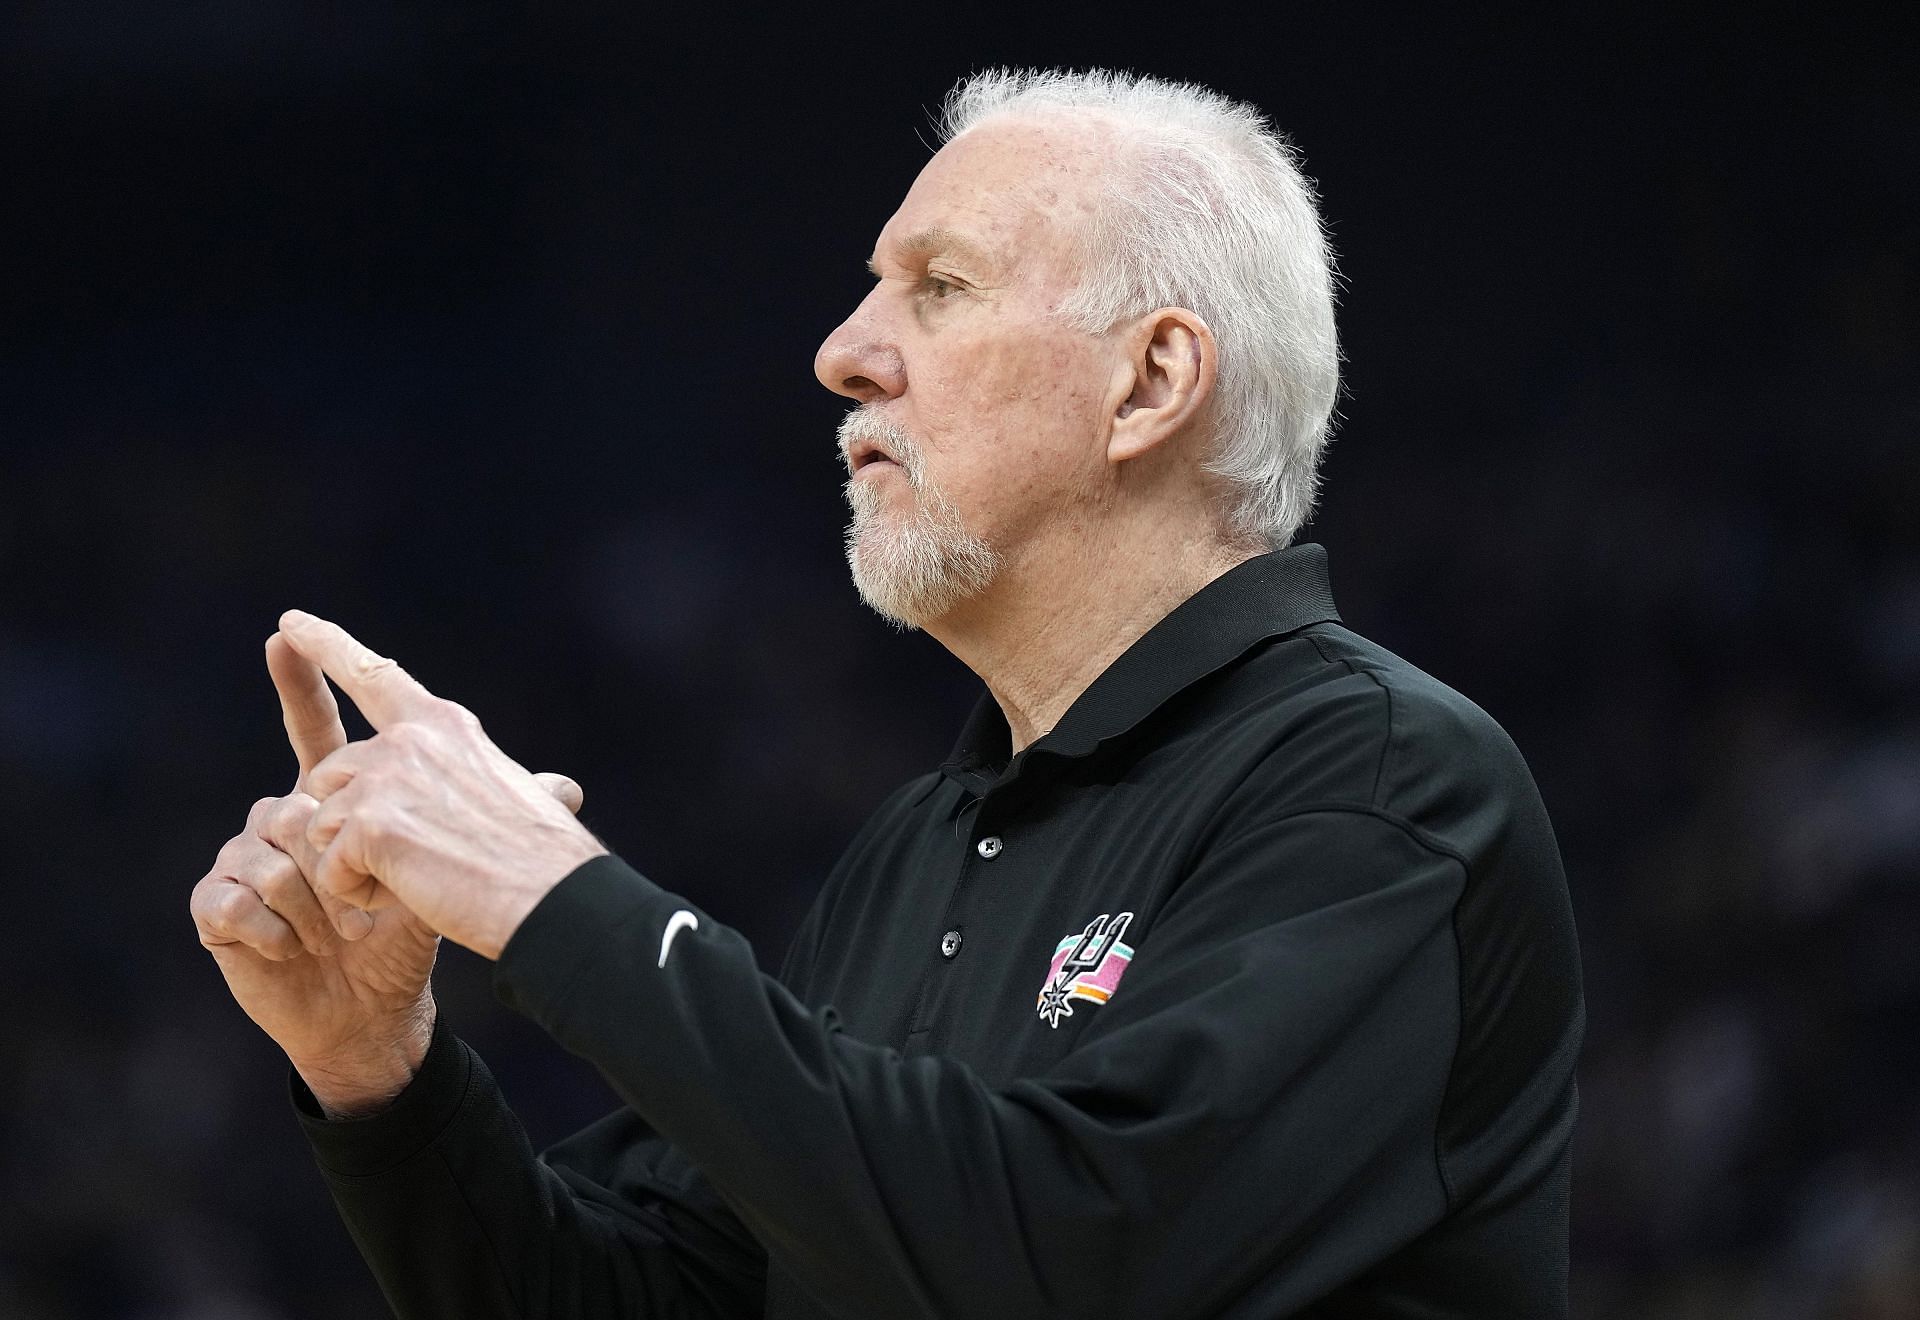 NBA Rumors suggest San Antonio Spurs head coach Gregg Popovich will return.